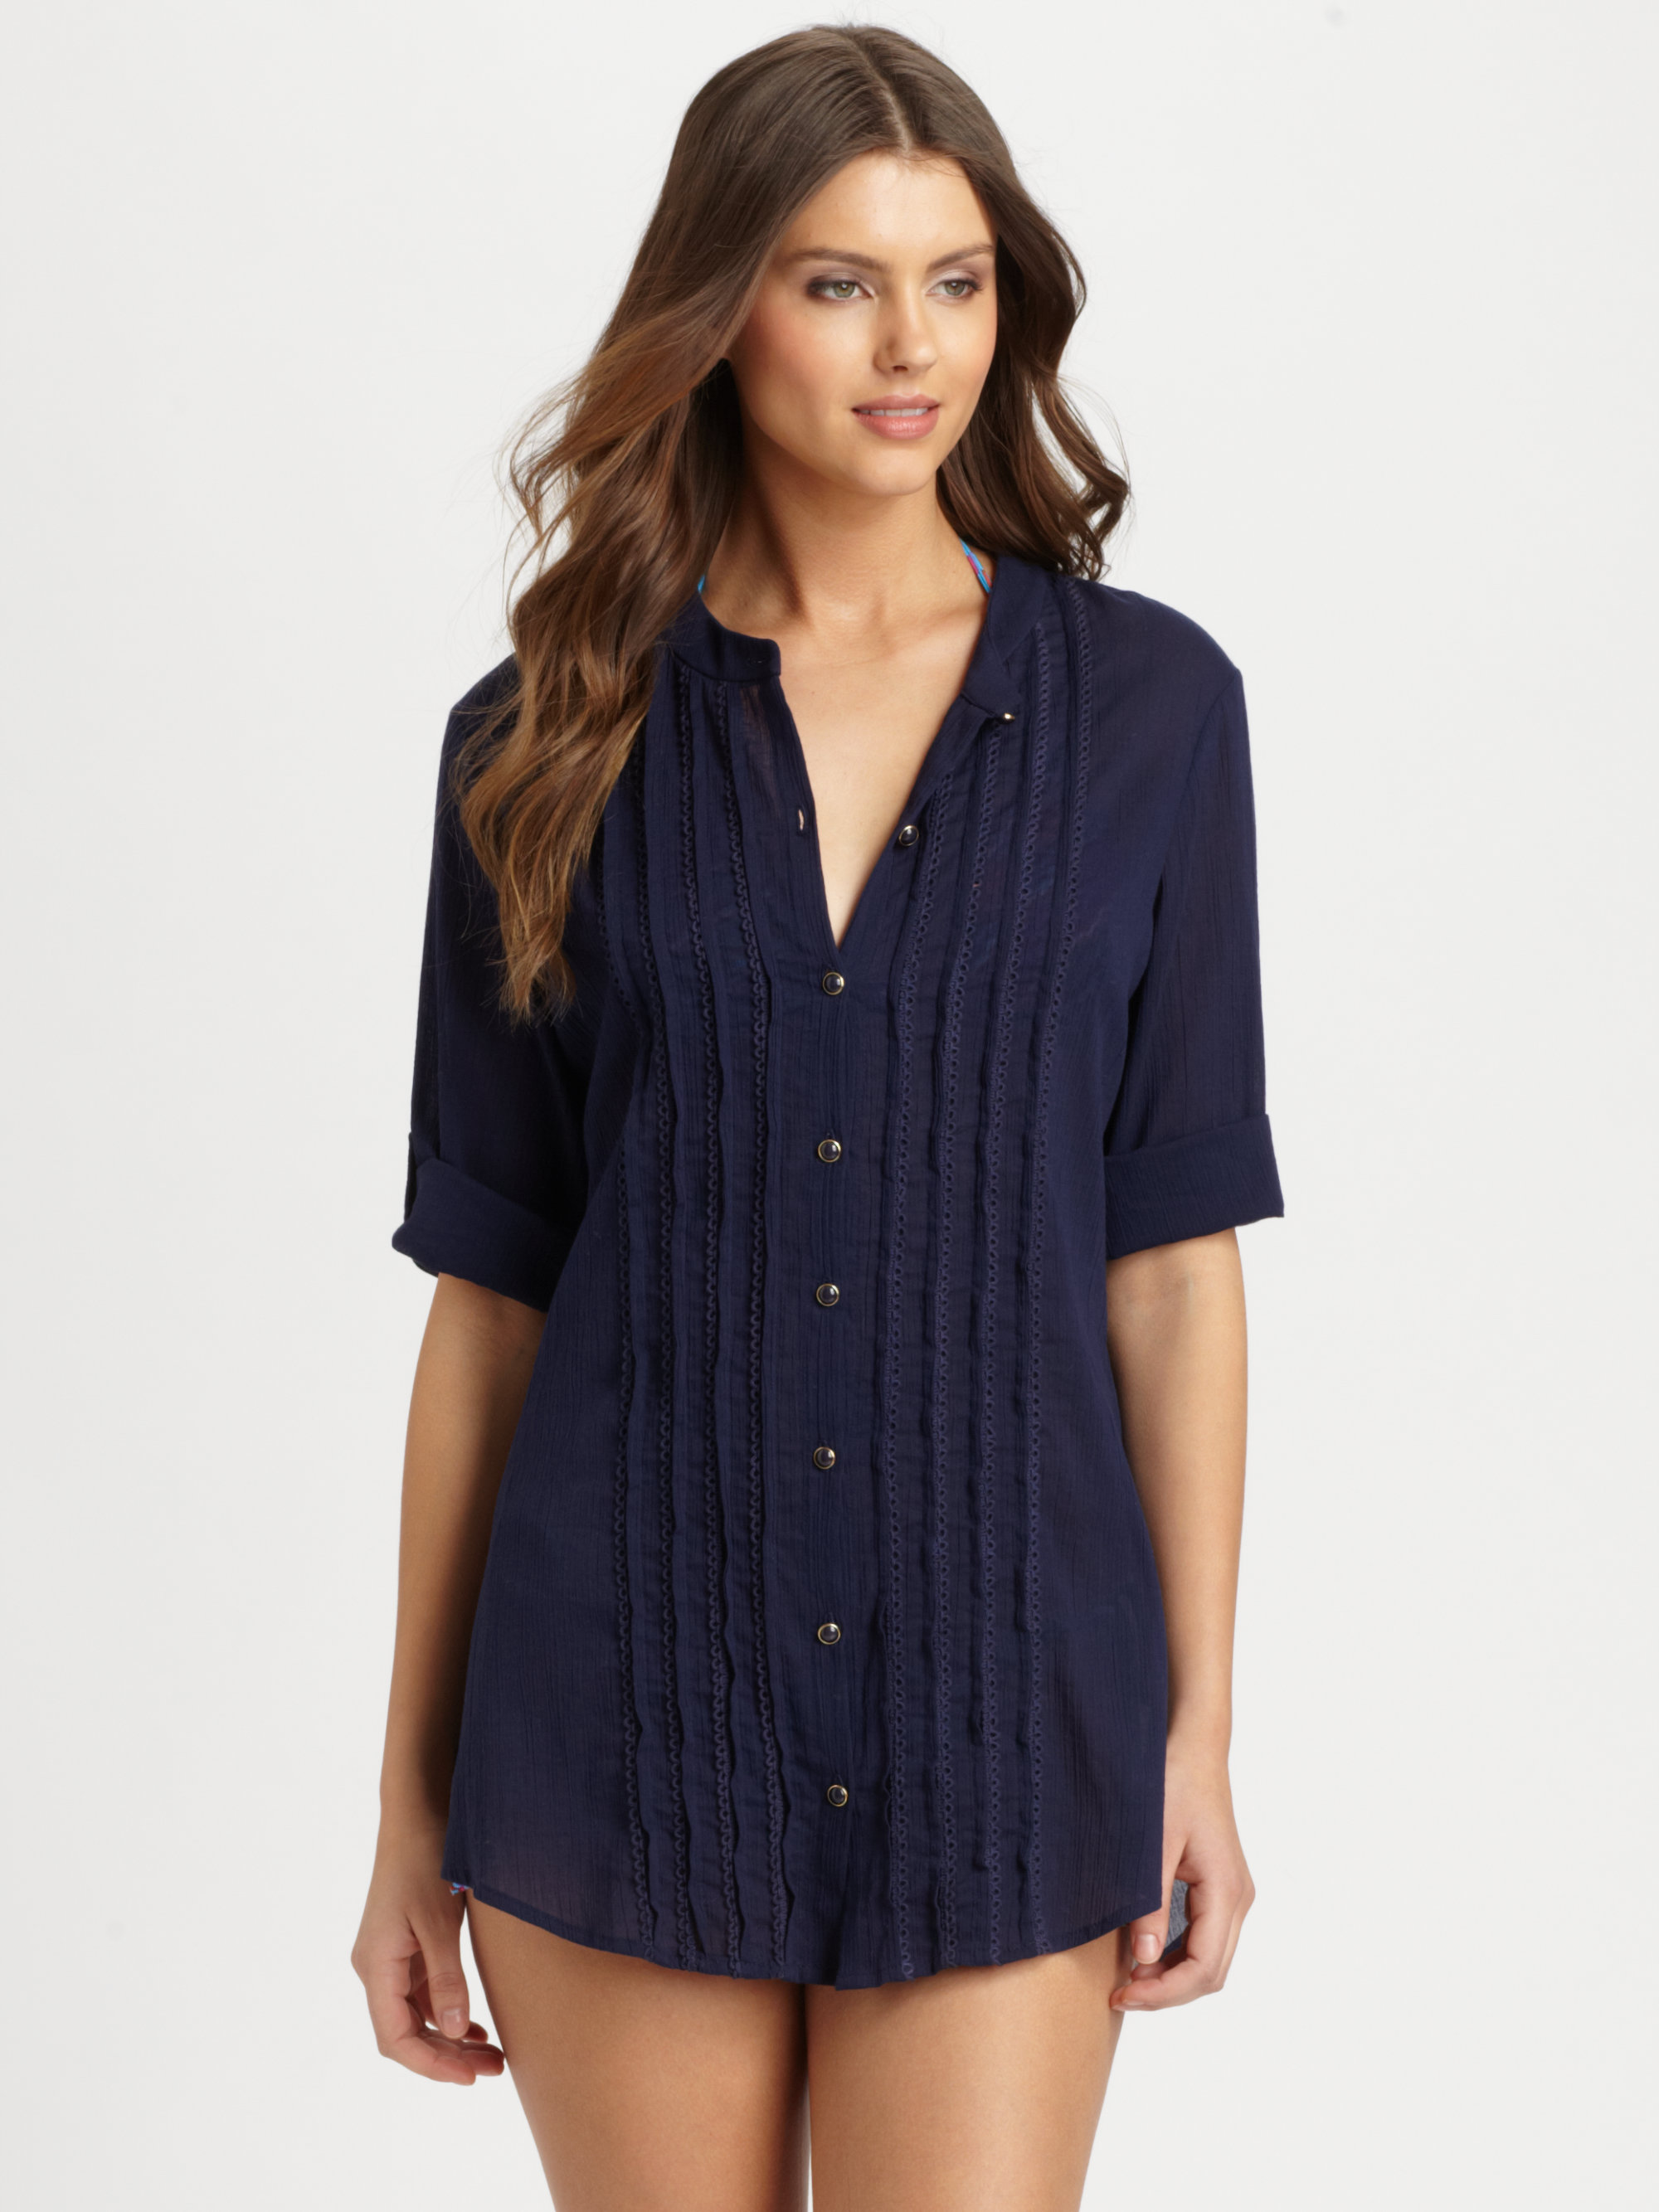 Shoshanna Crinkle Cotton Buttondown Shirt in Blue - Lyst